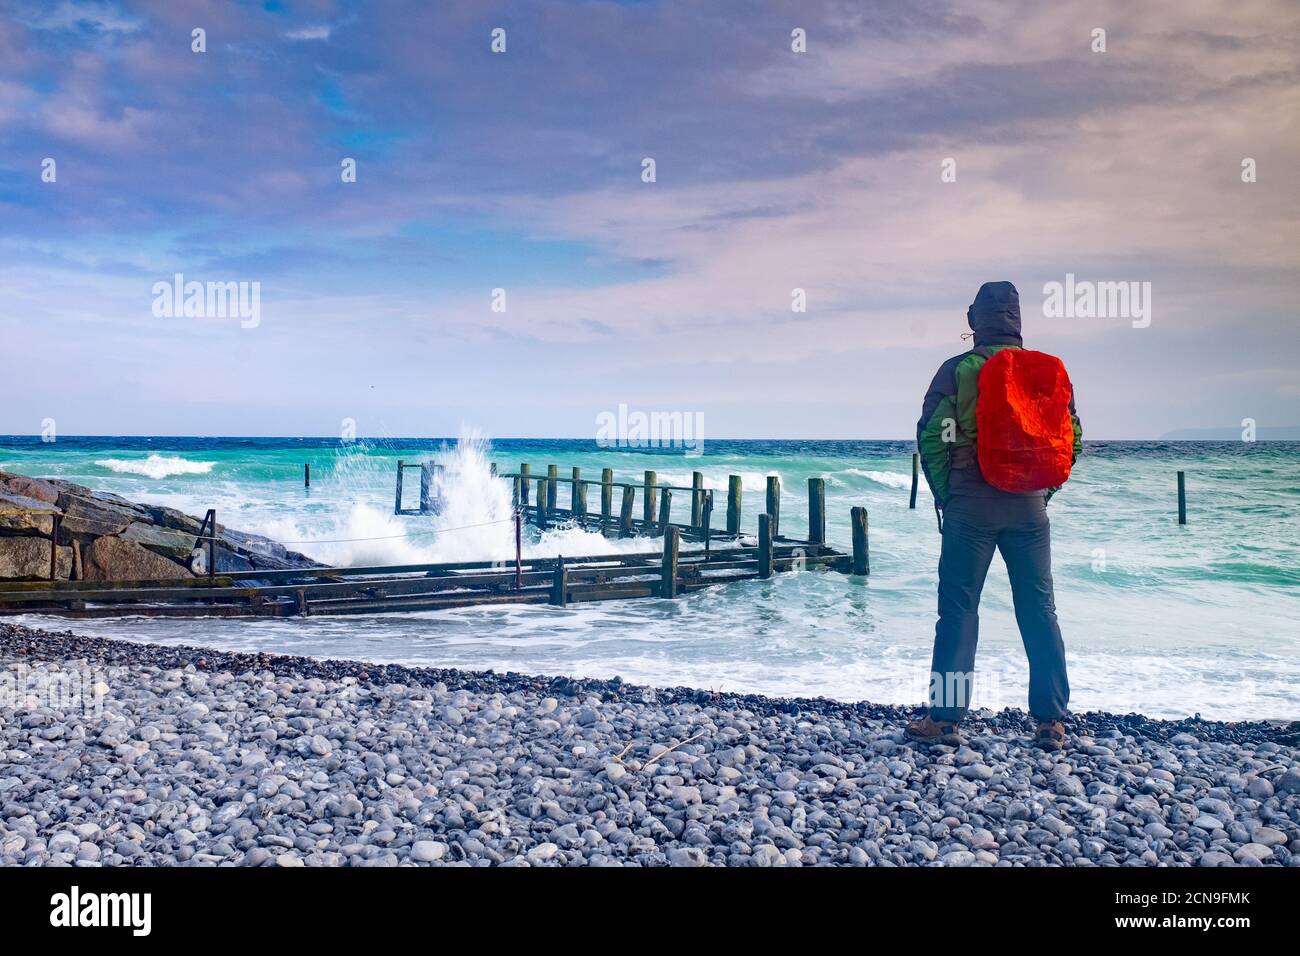 Man tourist watch how waves crash into pier Stock Photo